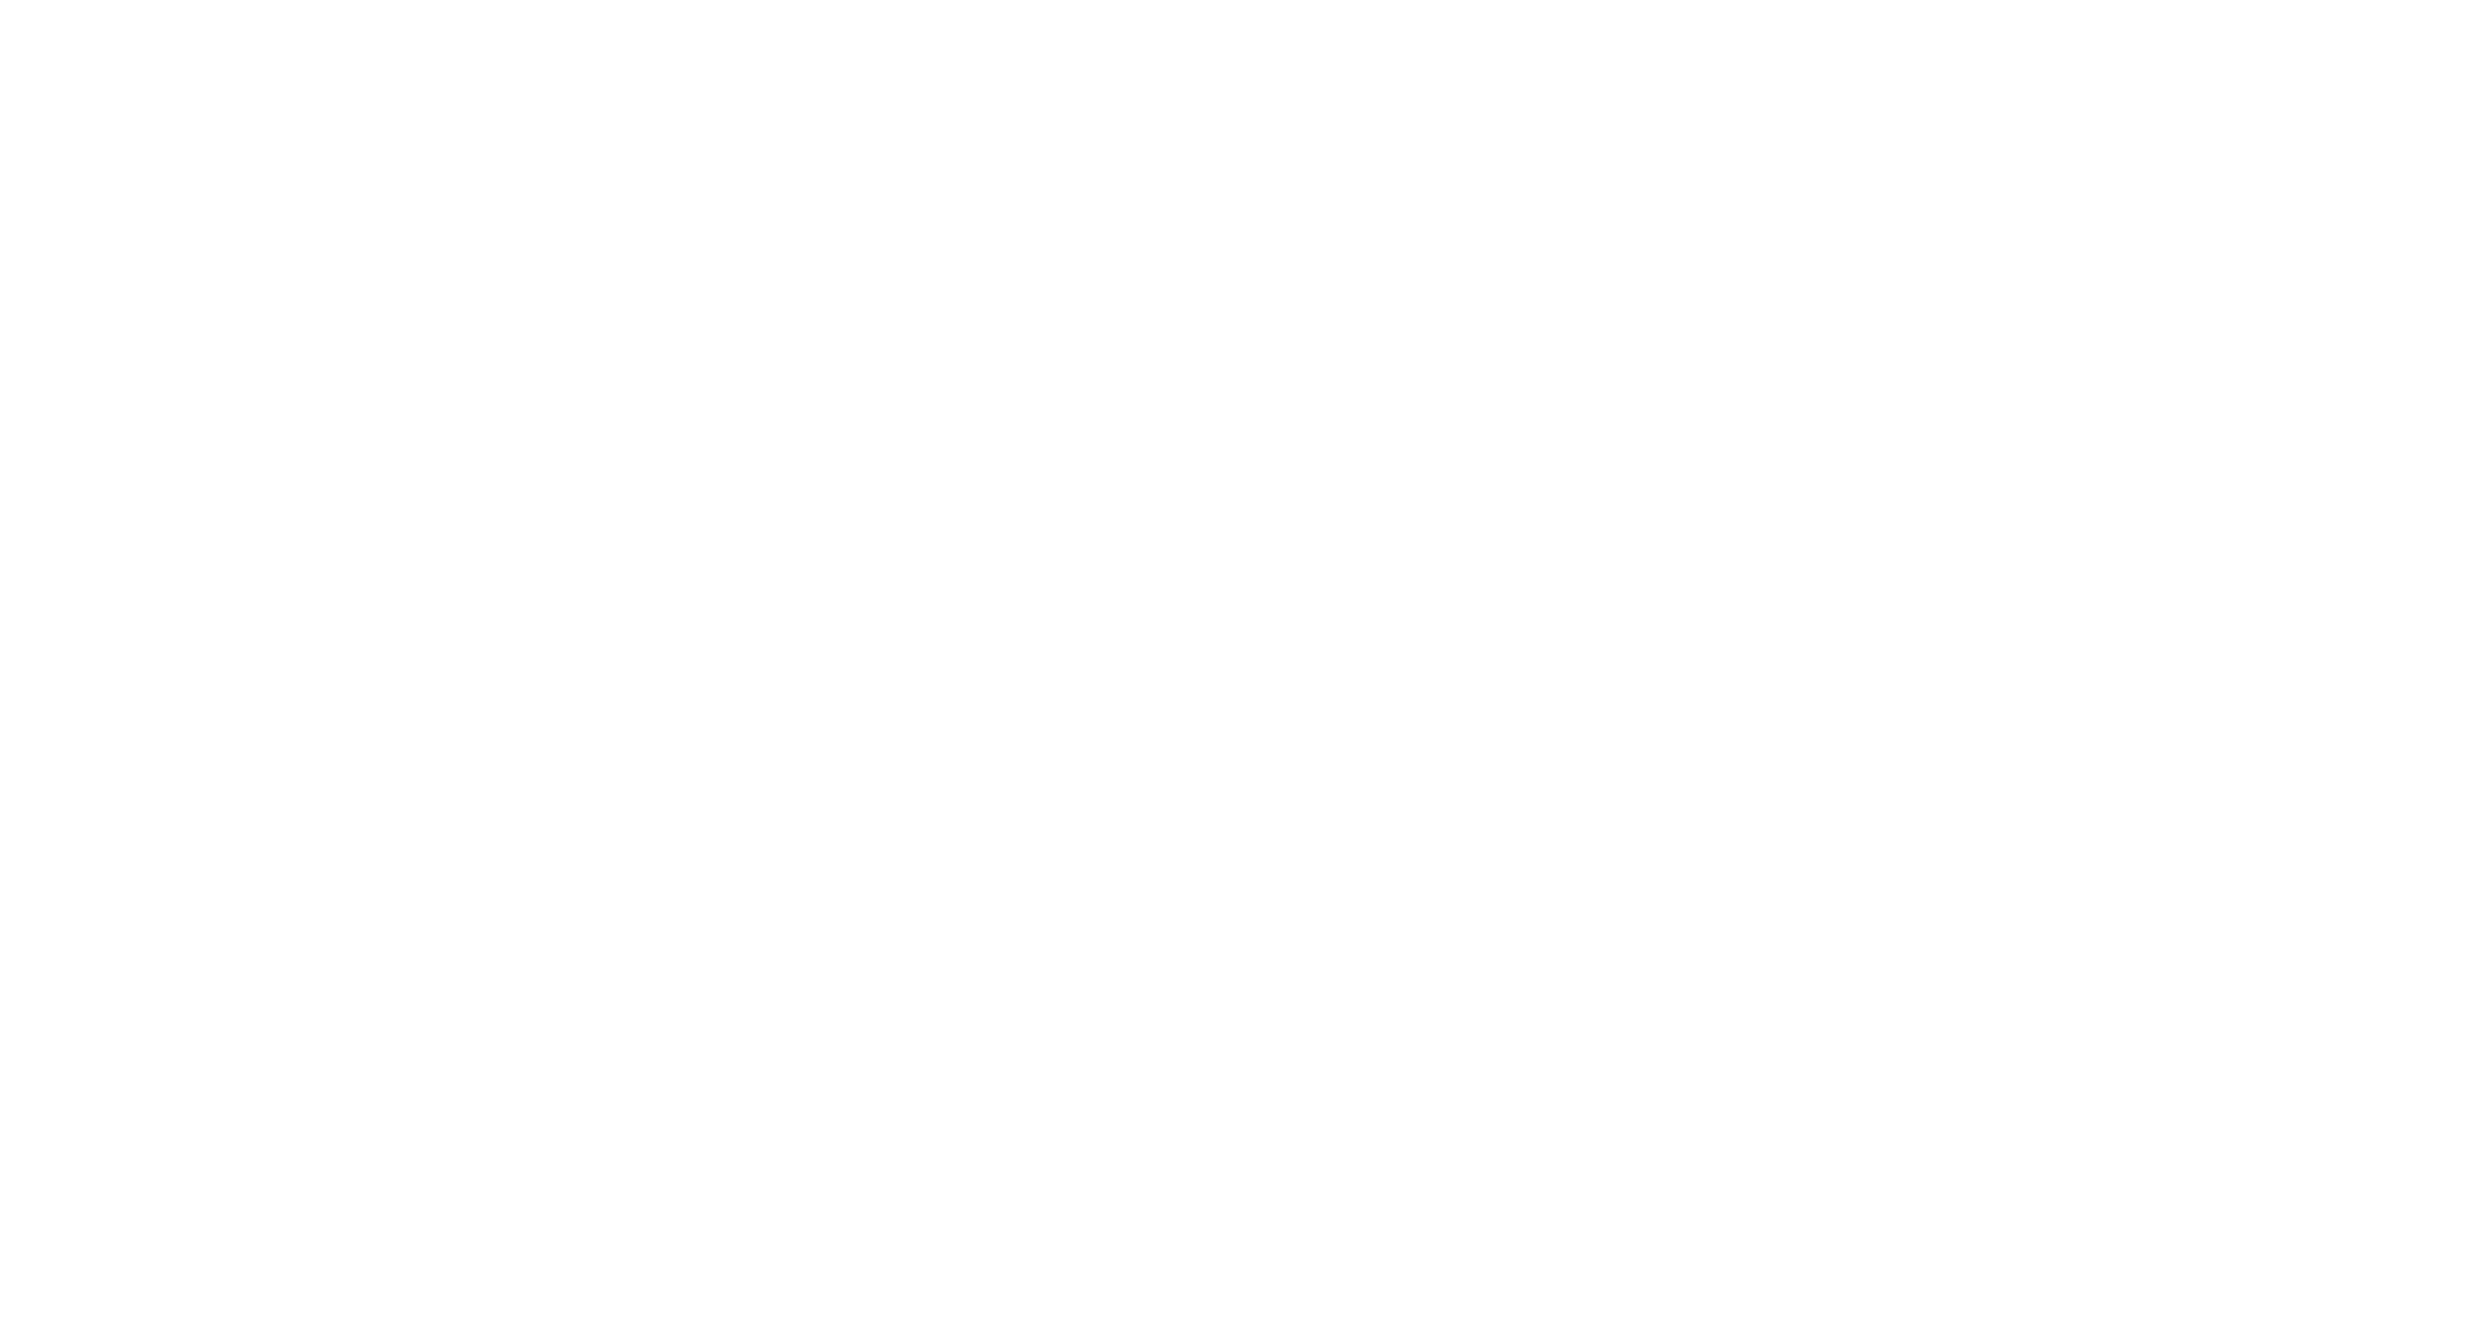 Republic of Türkiye Ministry of Foreign Affairs logo